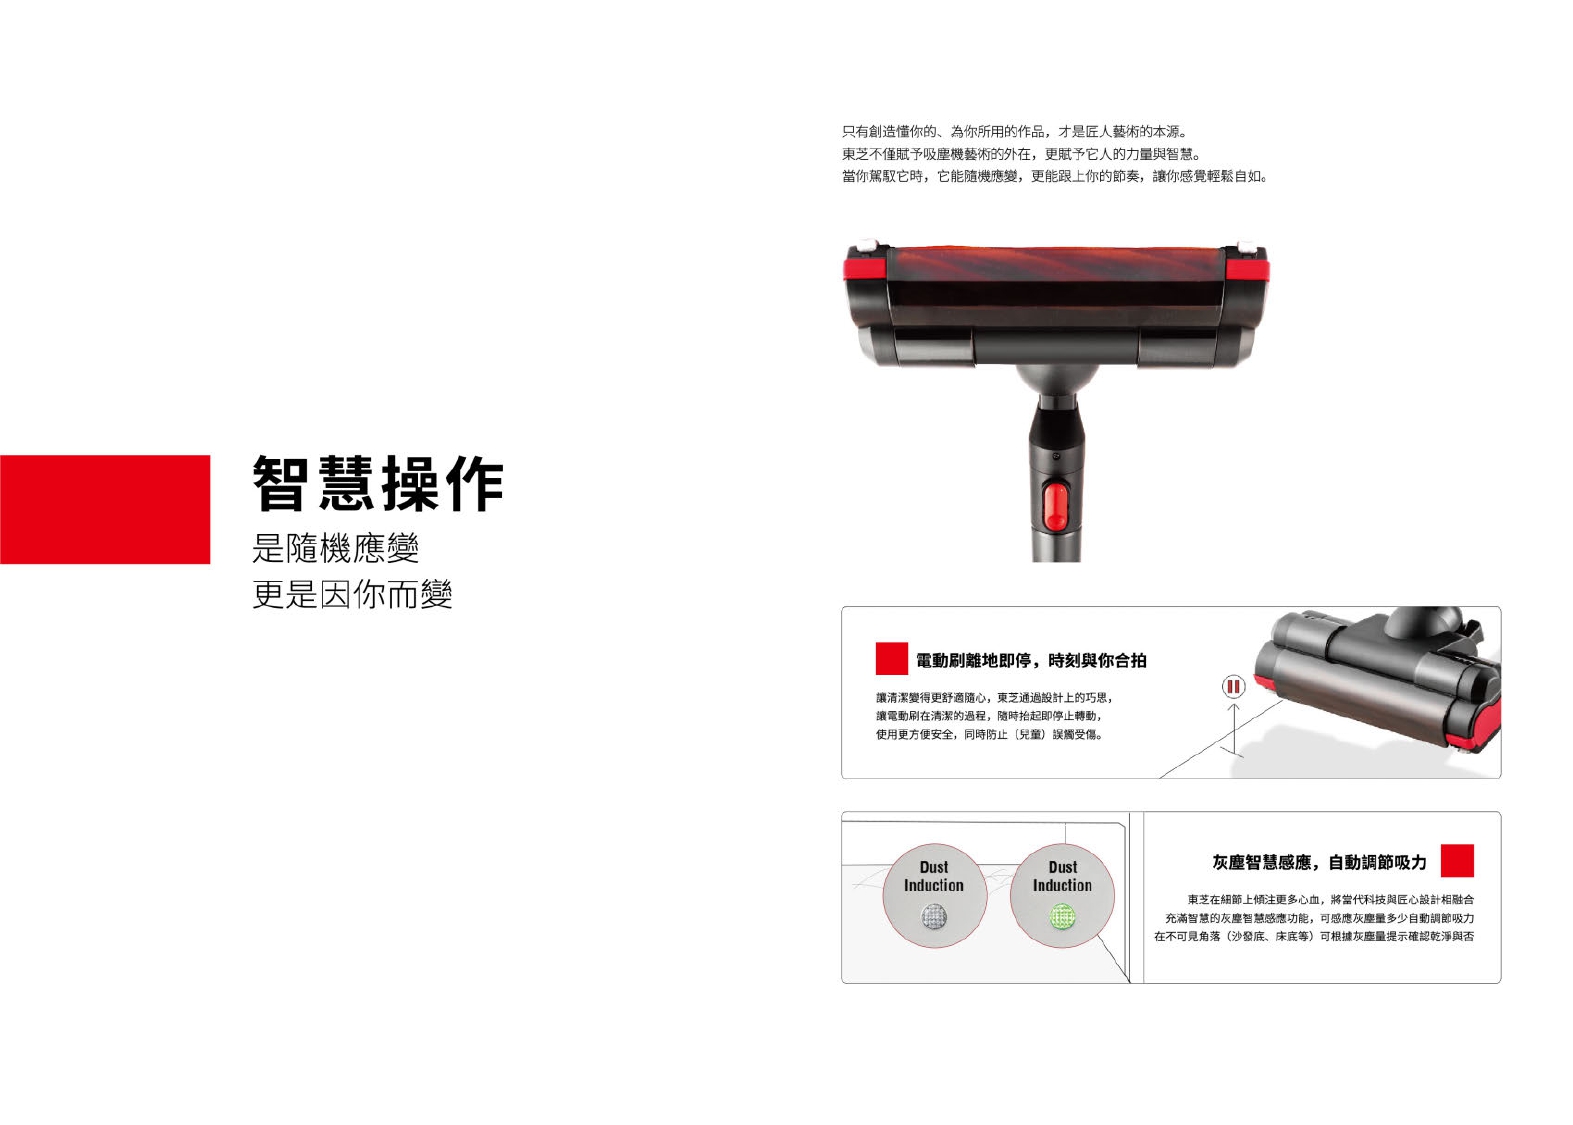 Toshiba 東芝 VC-CL3000XBF(R) 2合1無線吸塵機 (紅色)